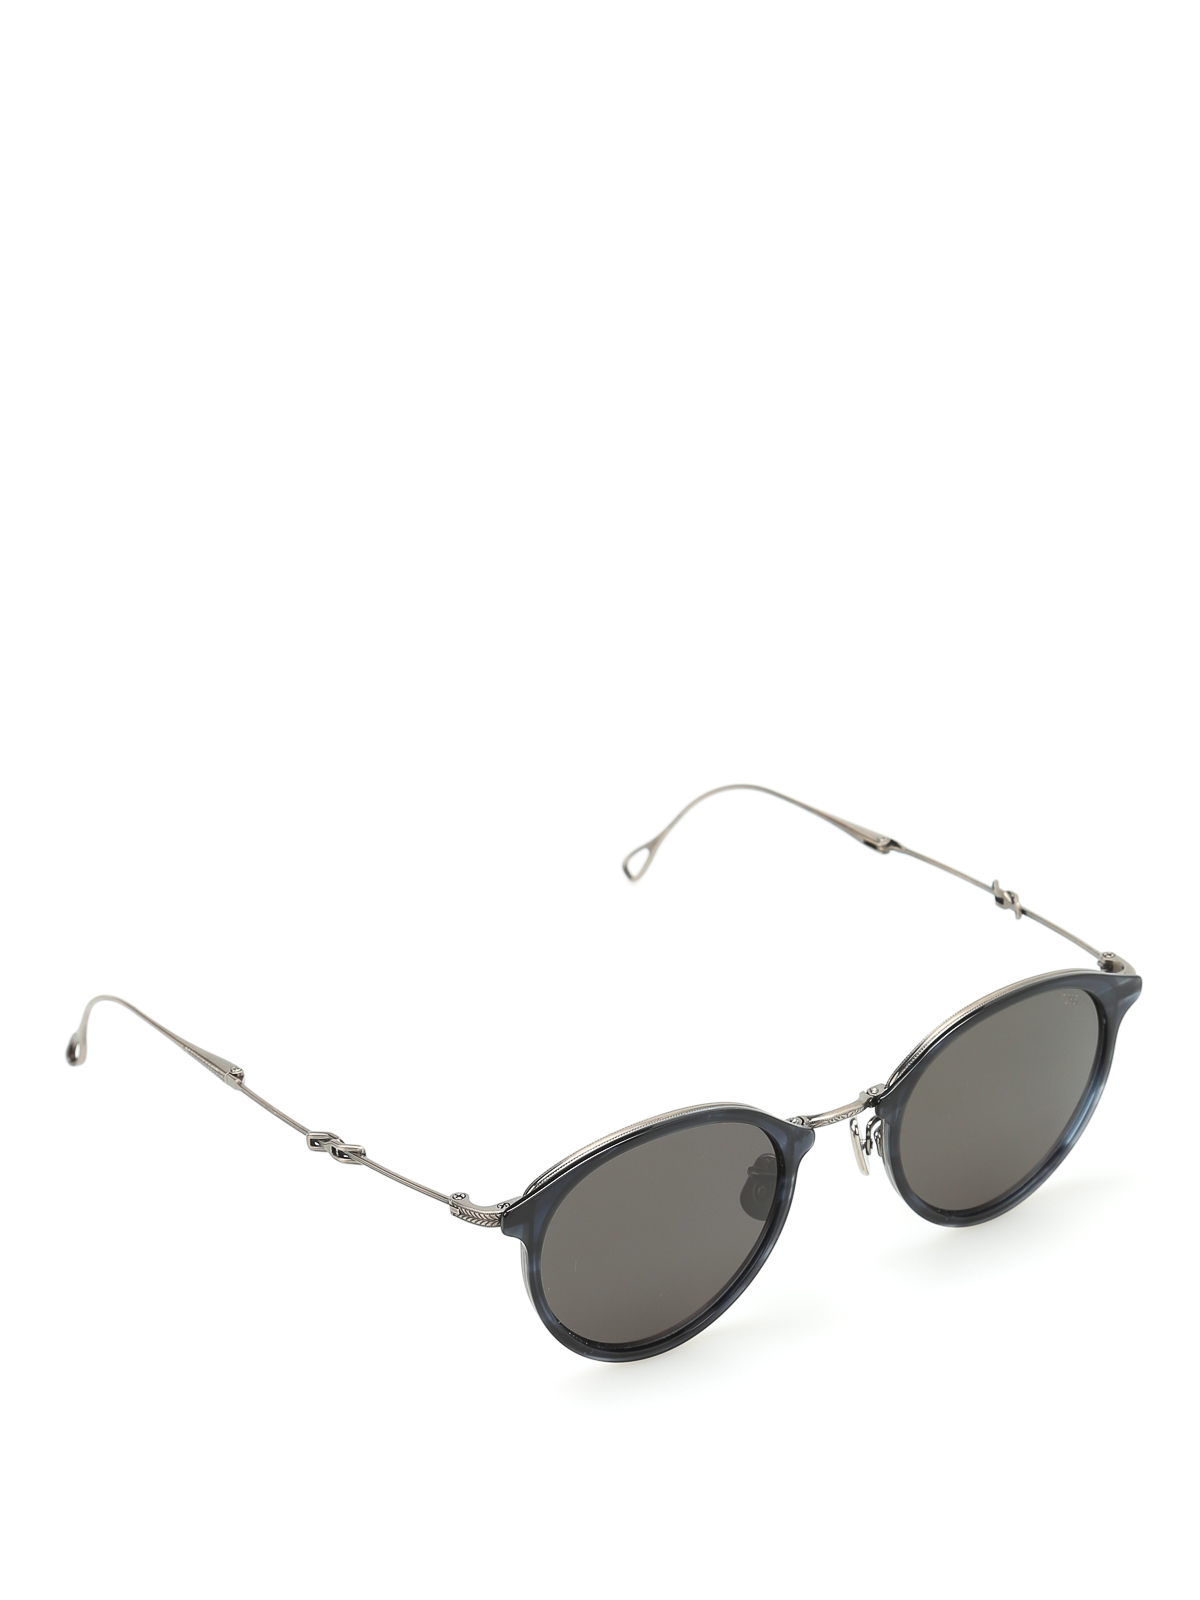 Sunglasses Eyevan7285 - Folding sunglasses model 801 